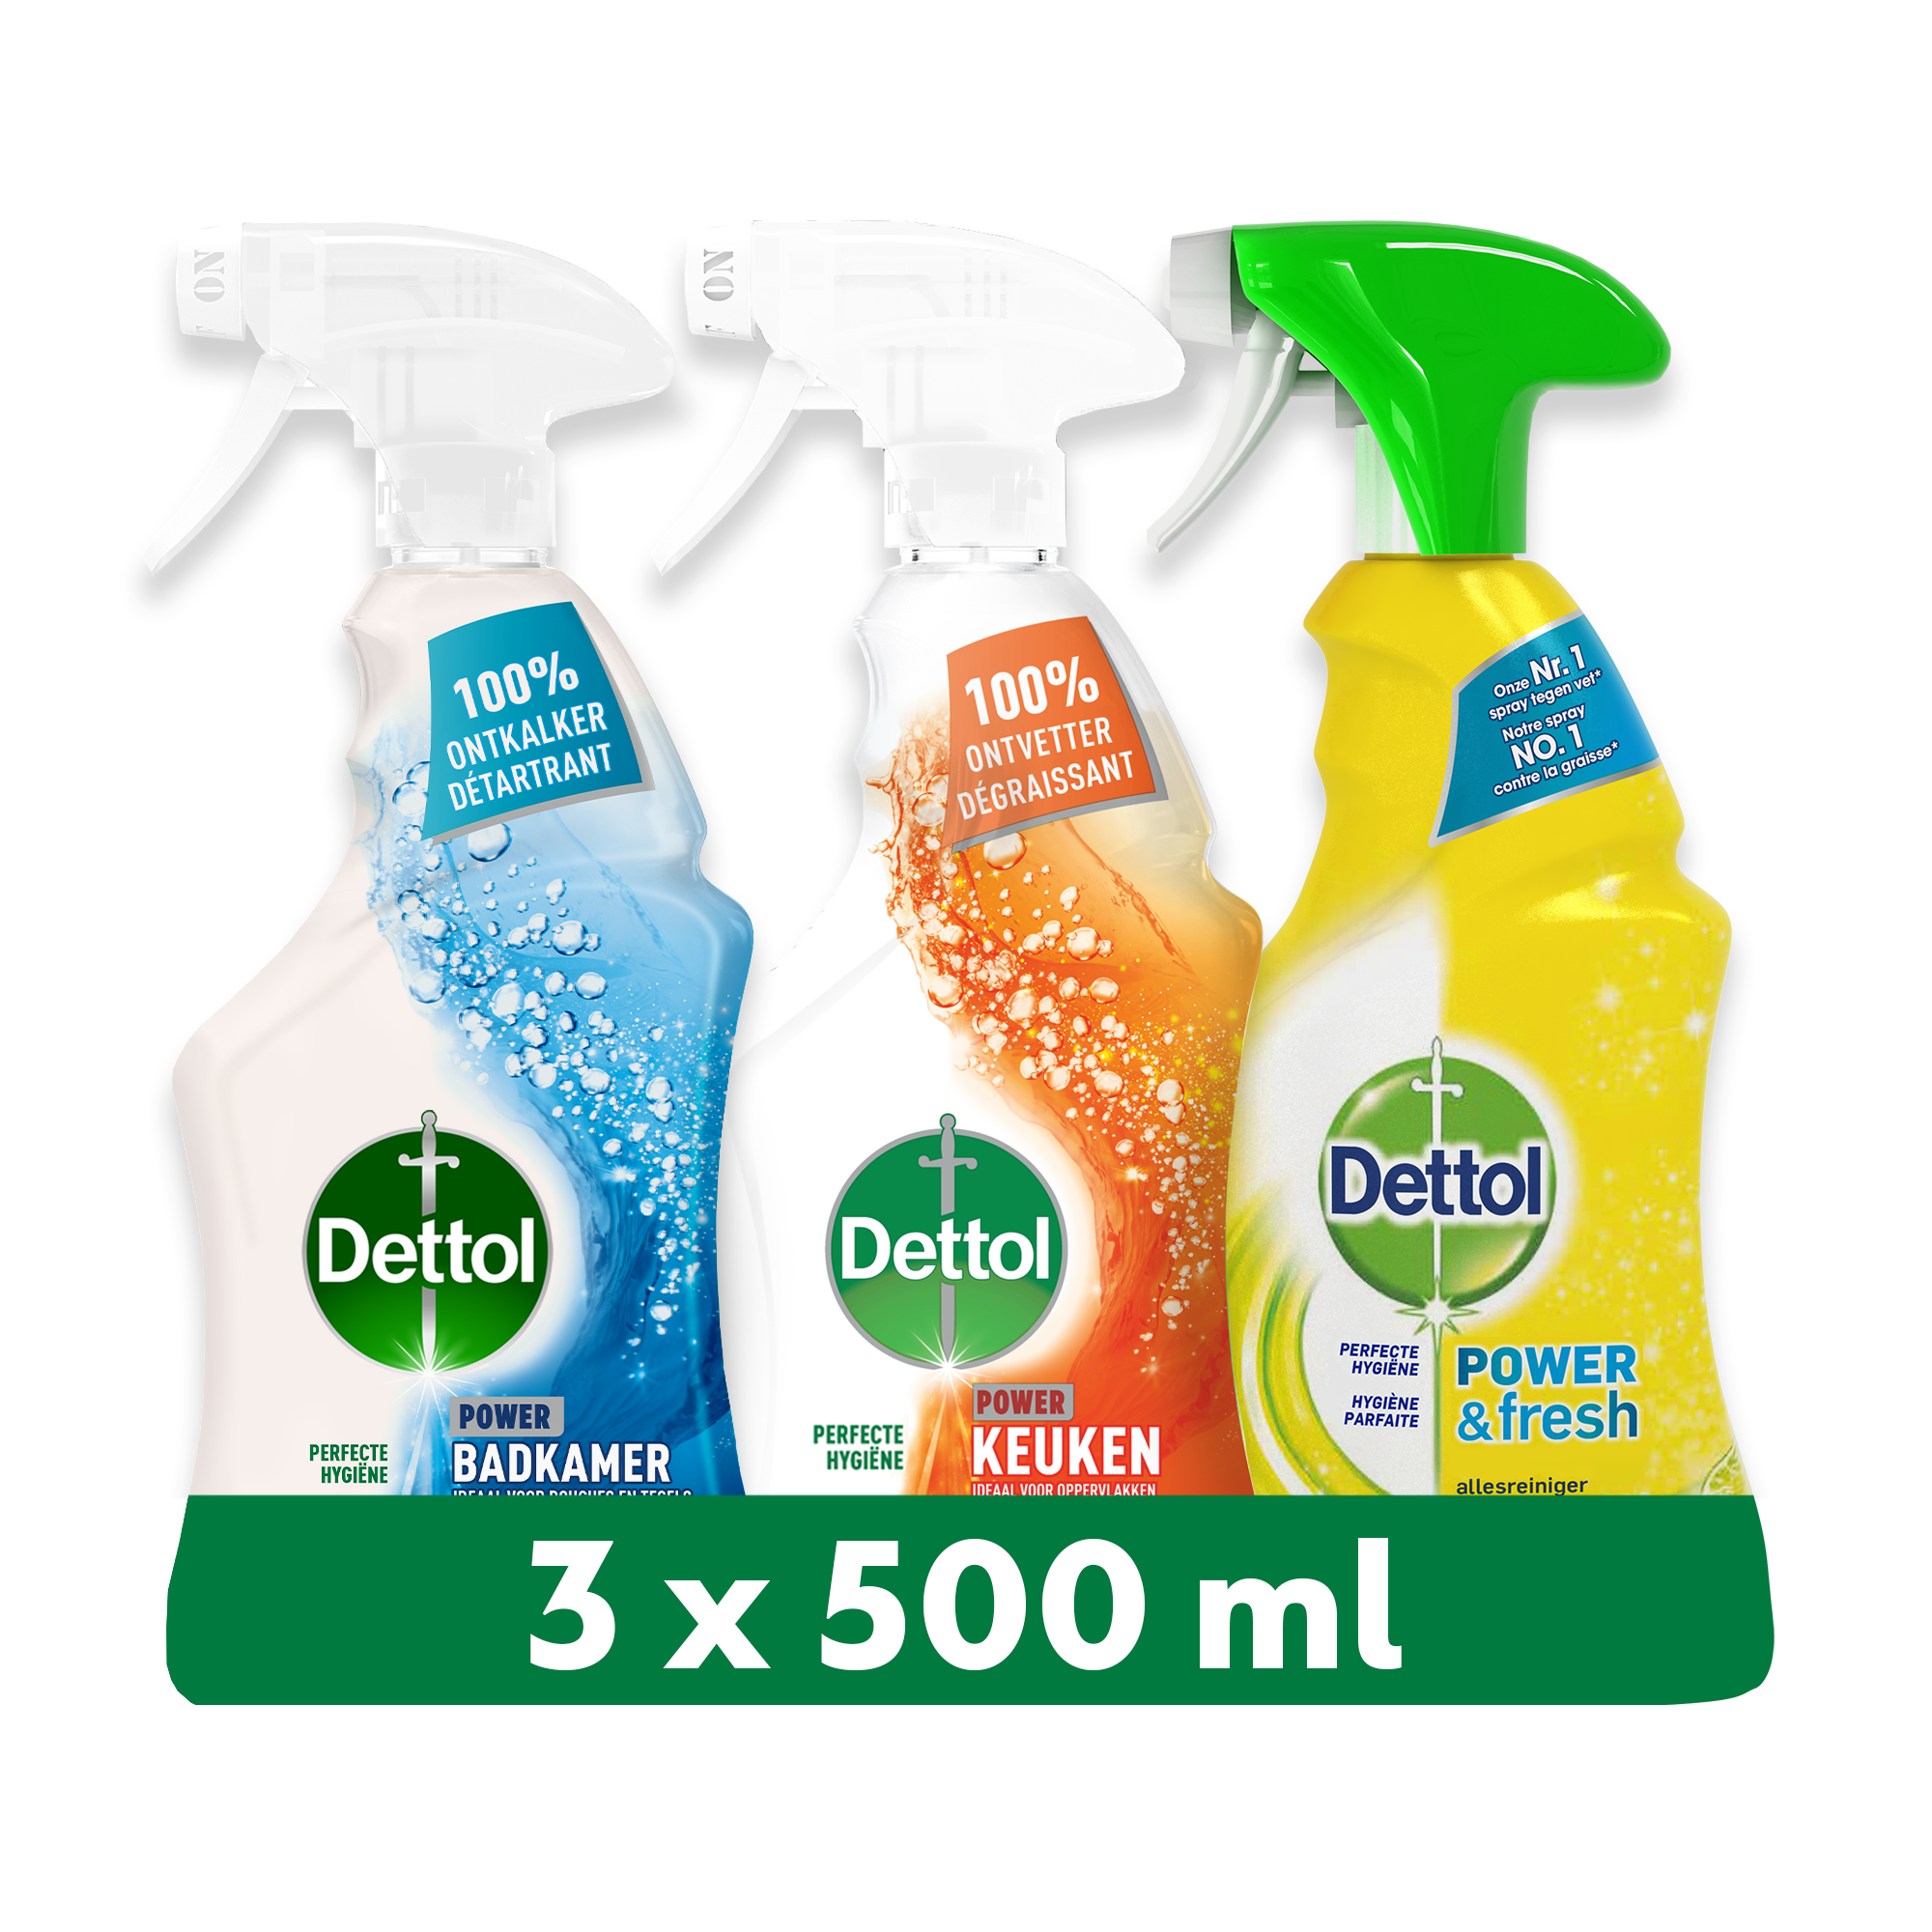 Dettol - 1,5L Allesreiniger Spray Power & - Badkamer 1x500 ml Keuken 1x500ml 1x500ml - Voordeelverpakking MijnDrogist.nl